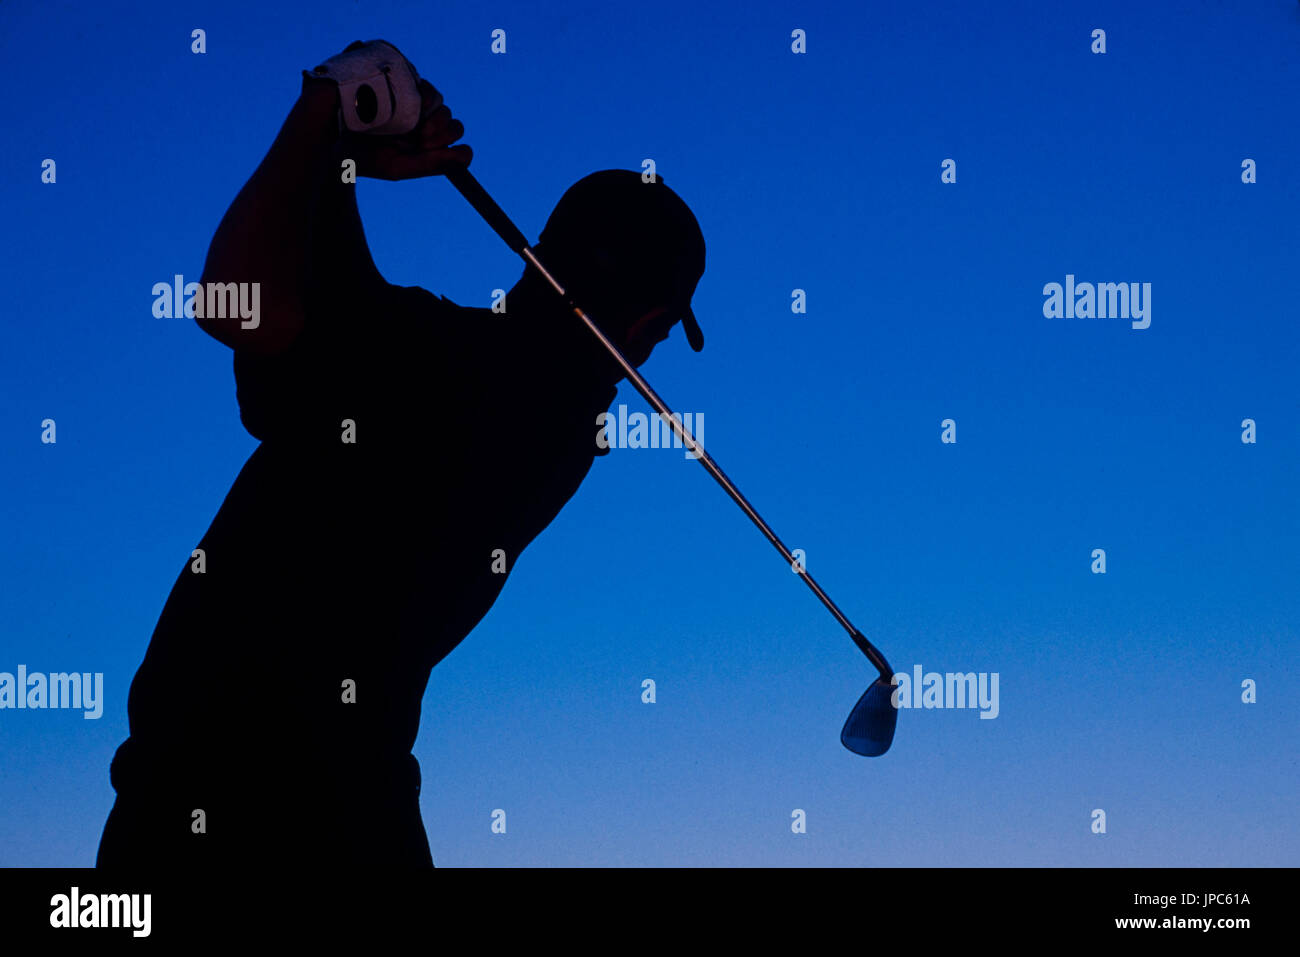 Un hombre es golfista siluetas contra un cielo azul profundo. Foto de stock